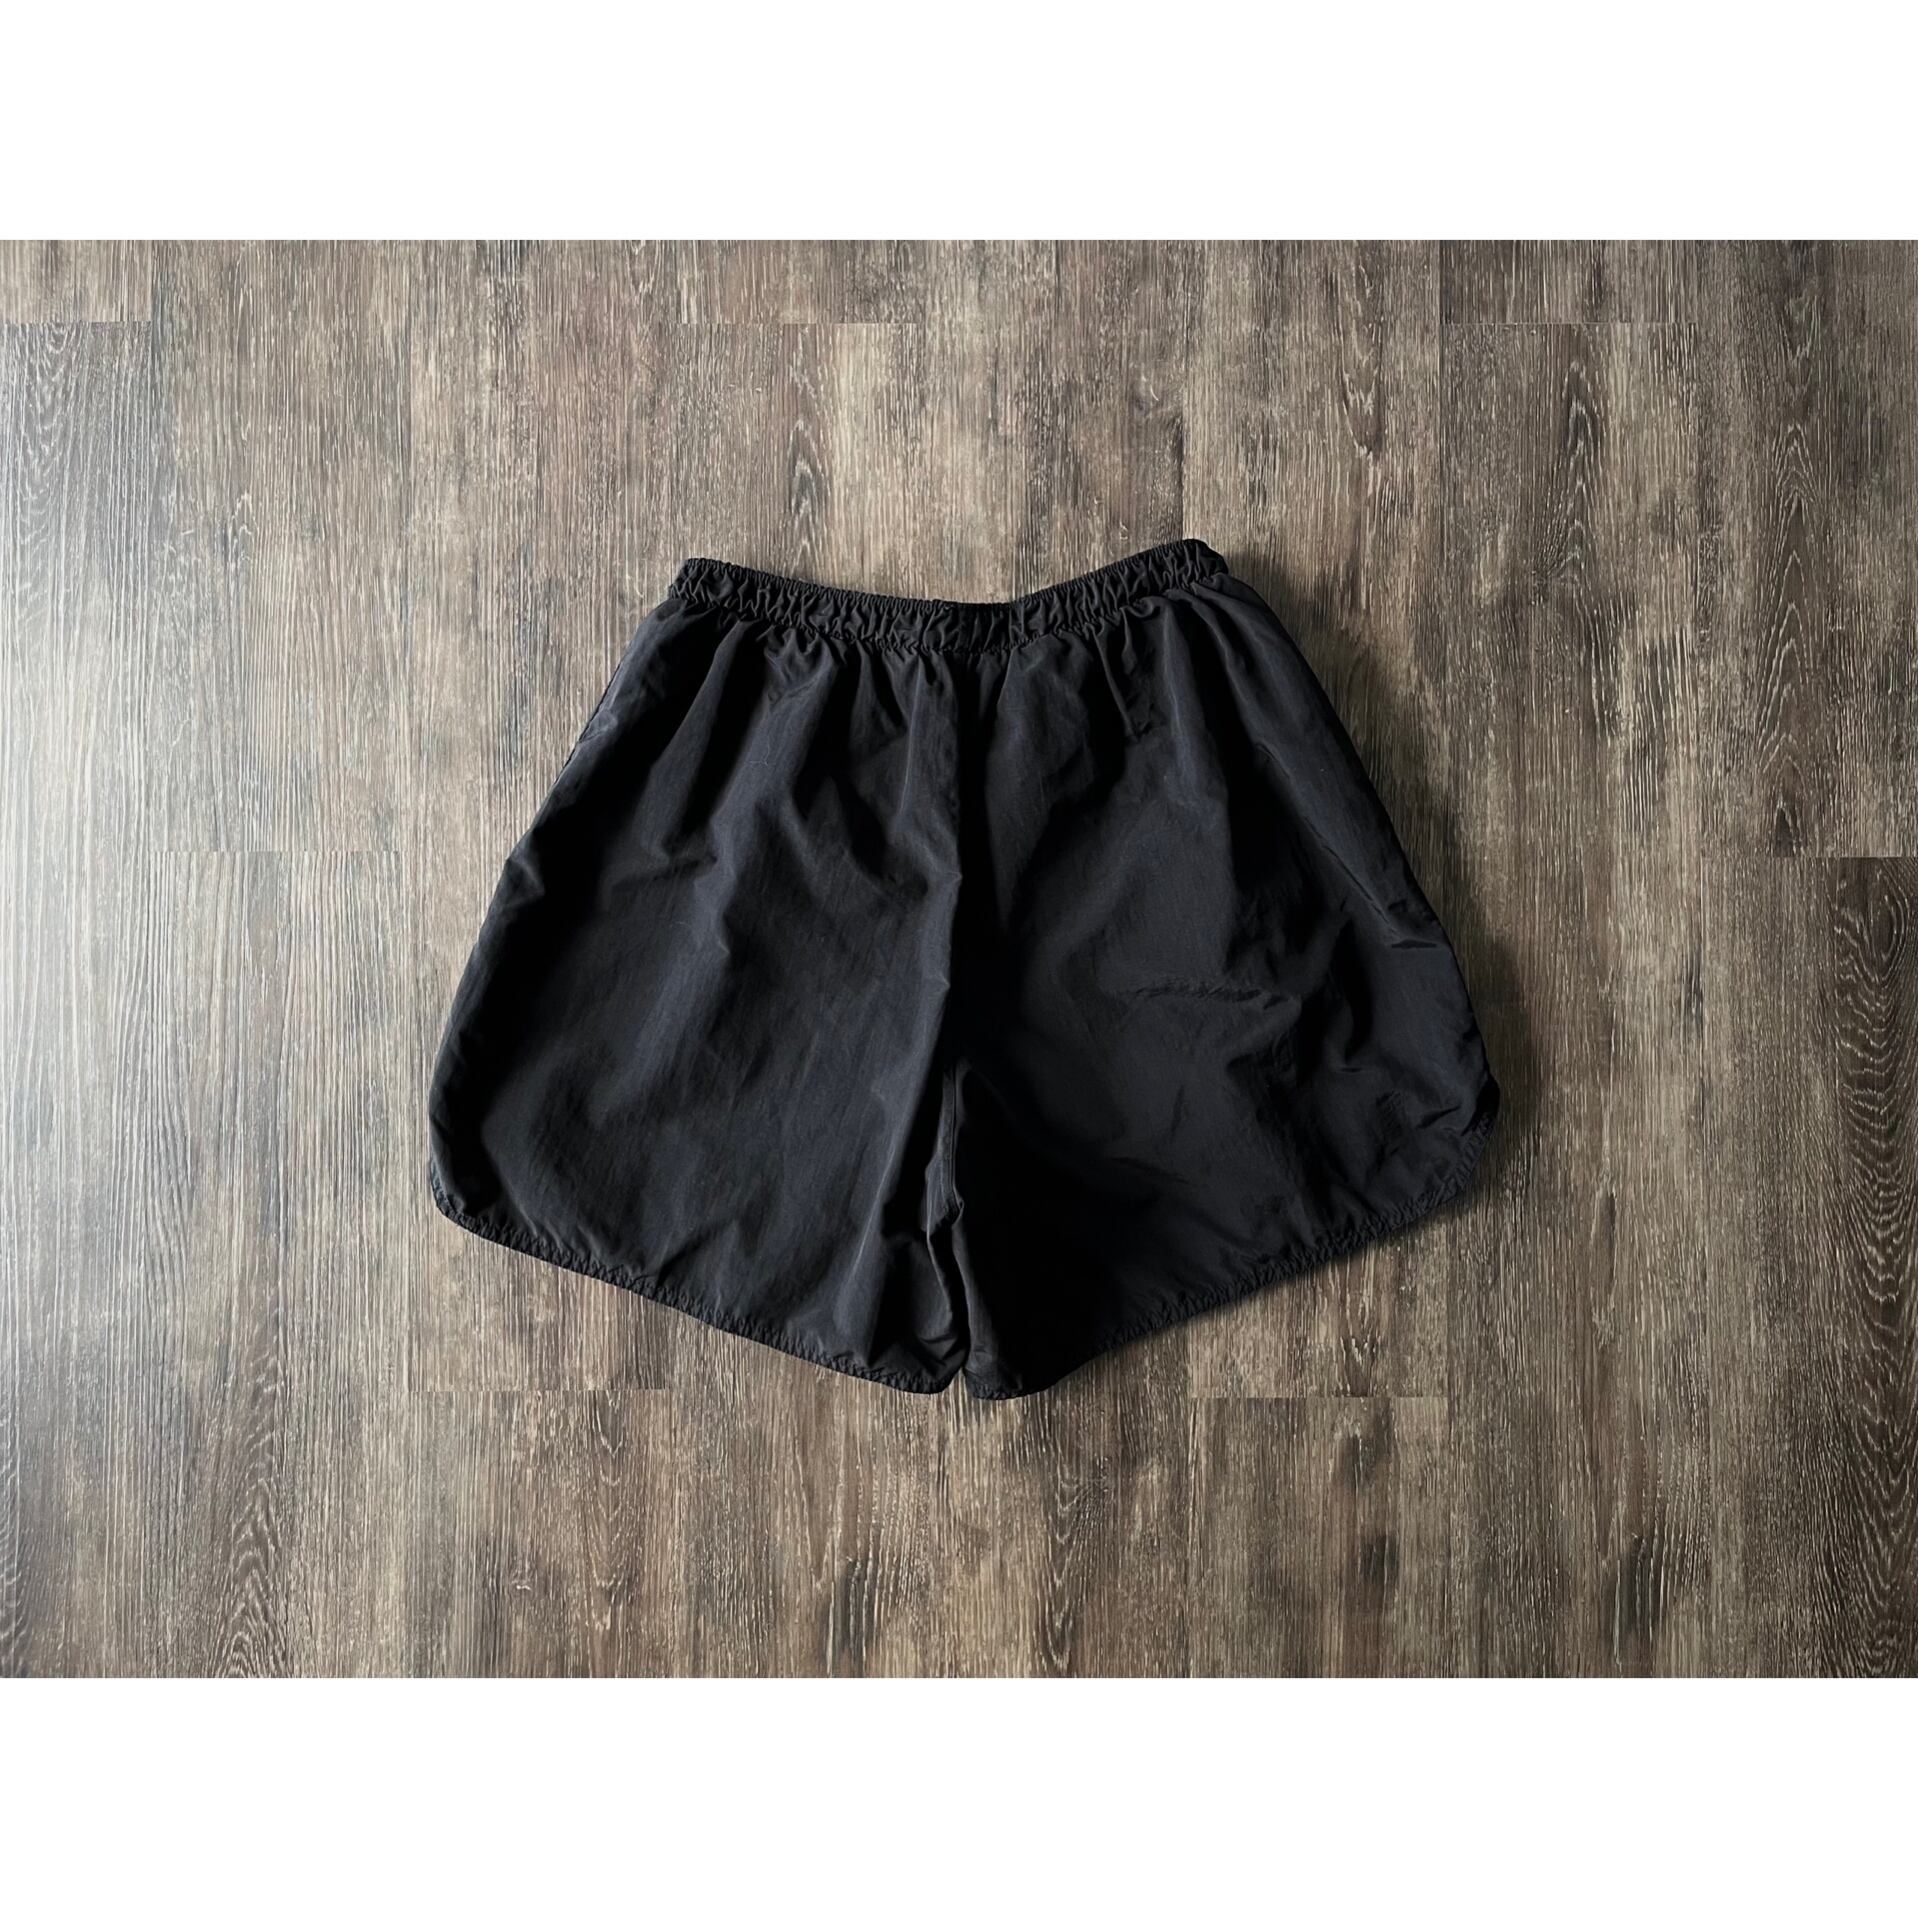 00s usarmy pfu nylon shorts small 米軍 ミリタリー トレーニング